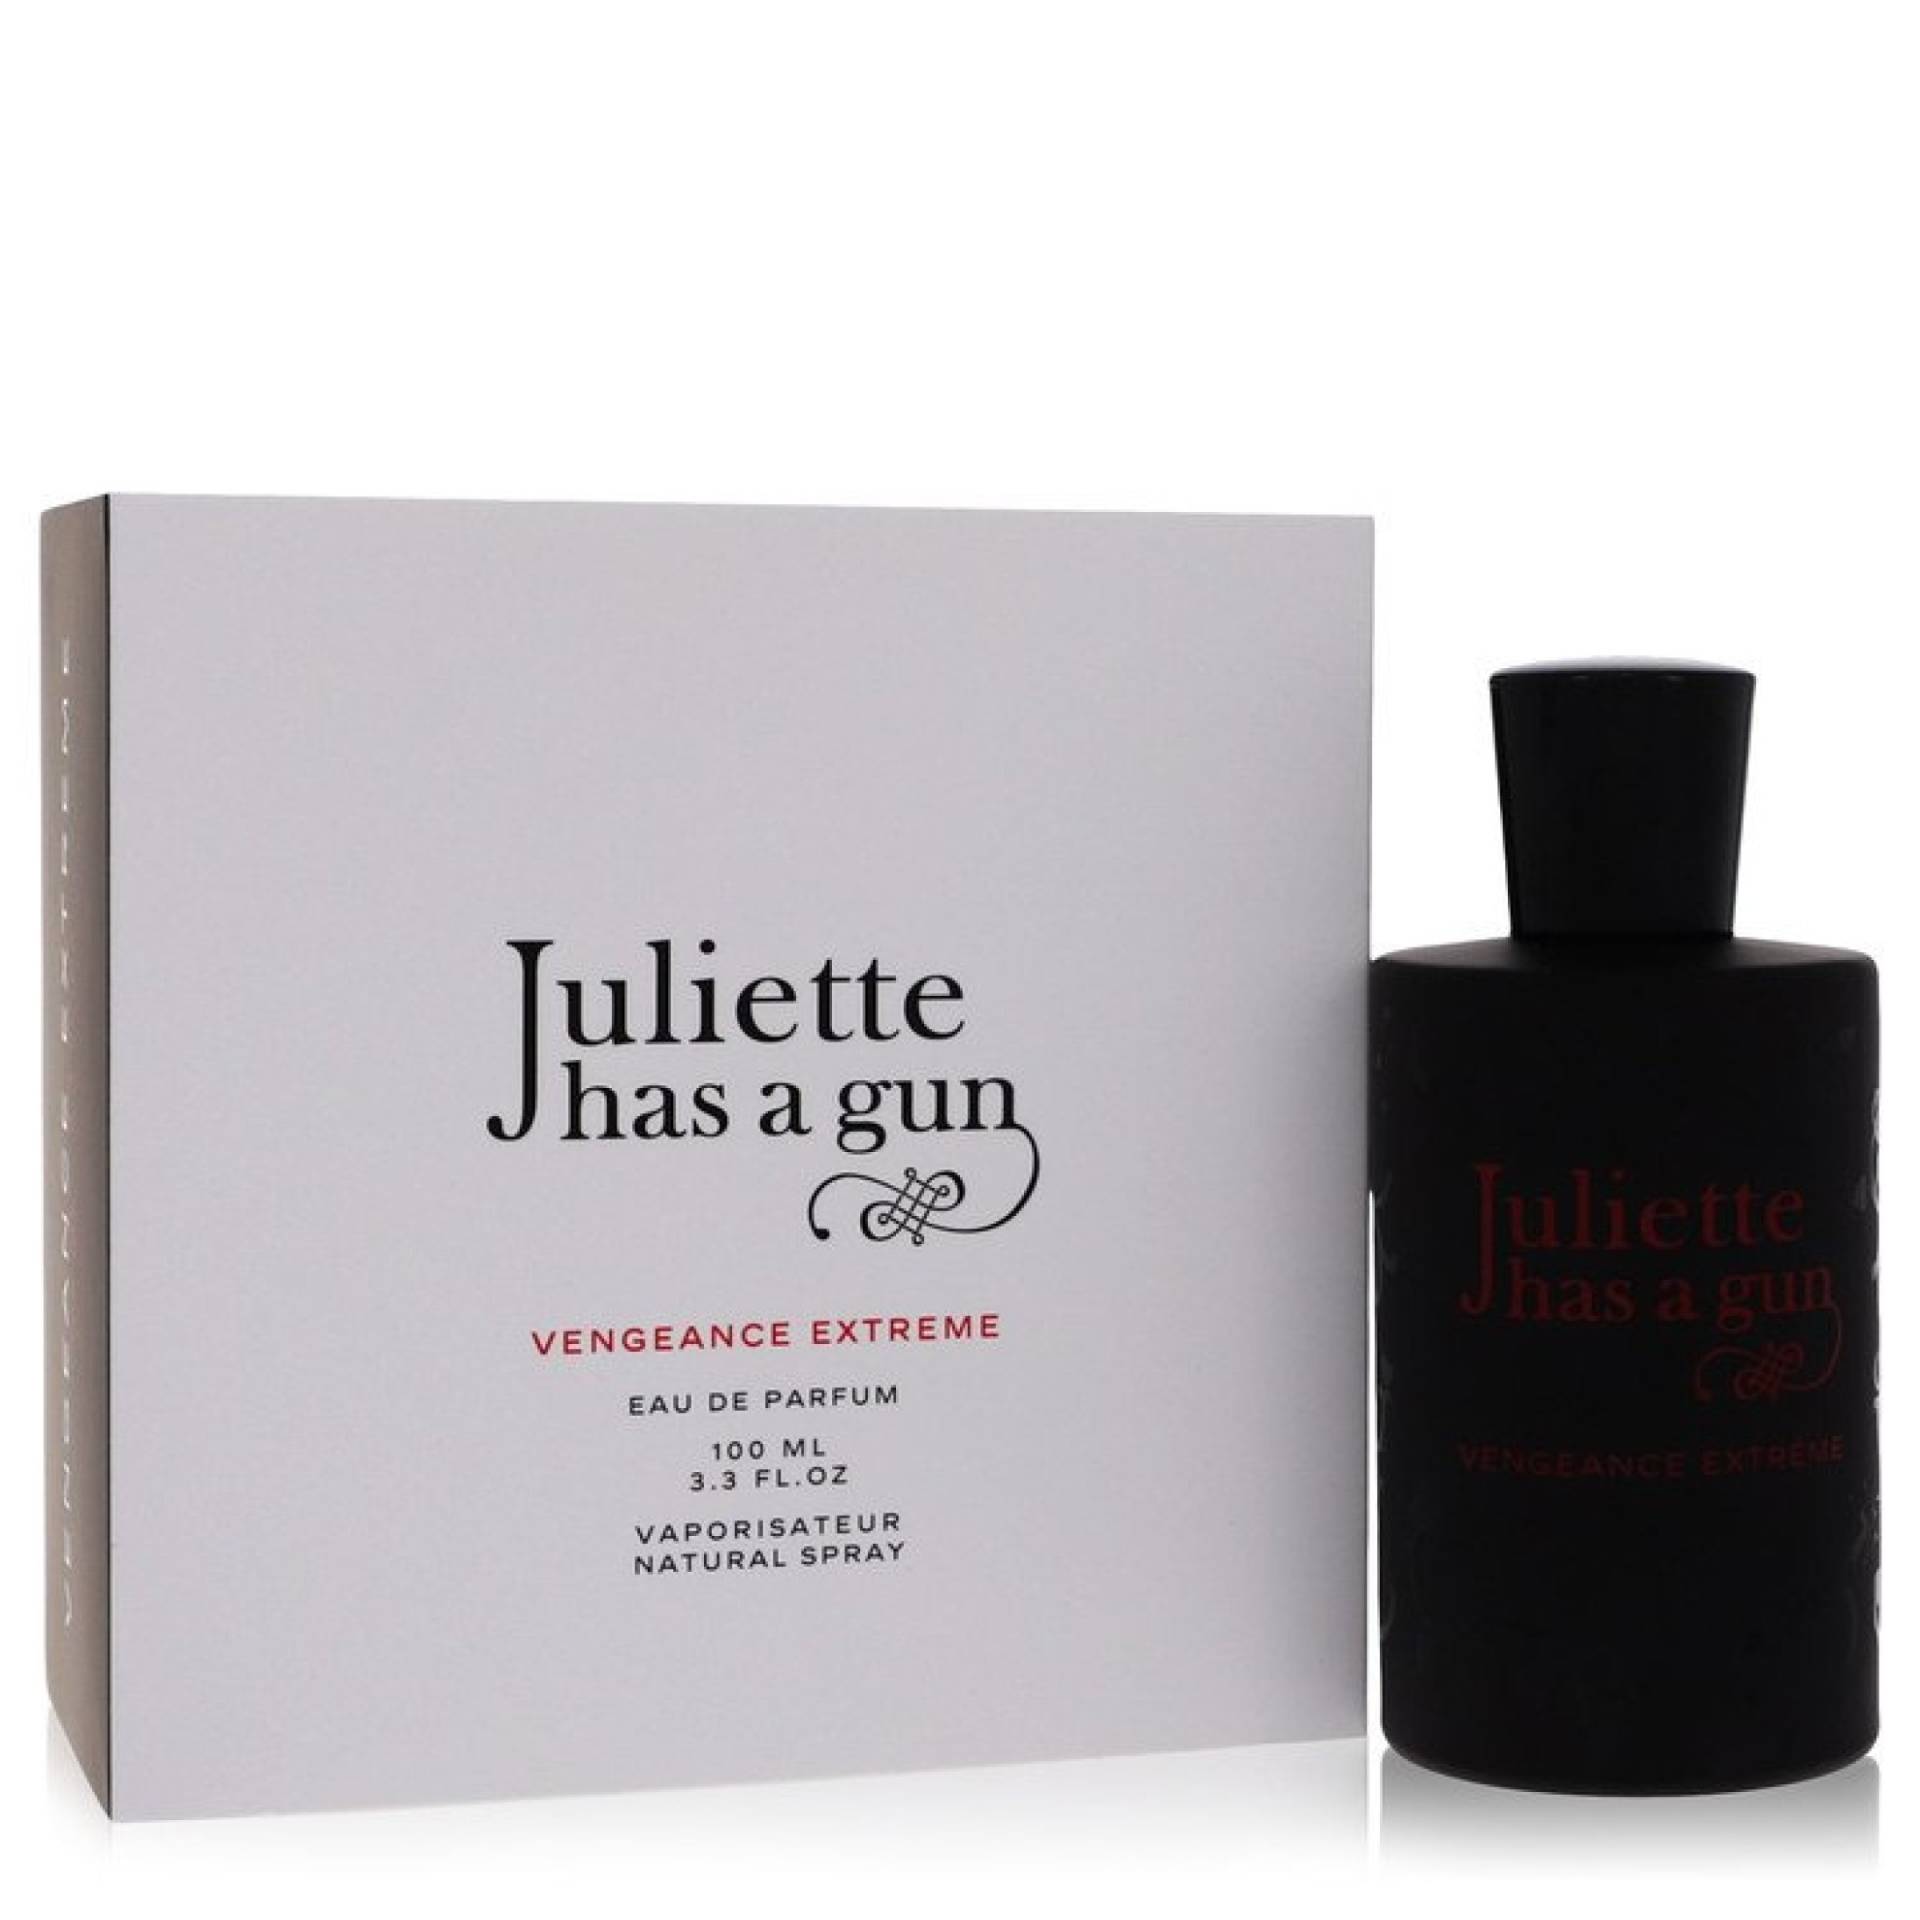 Juliette Has a Gun Lady Vengeance Extreme Eau De Parfum Spray 100 ml von Juliette Has a Gun